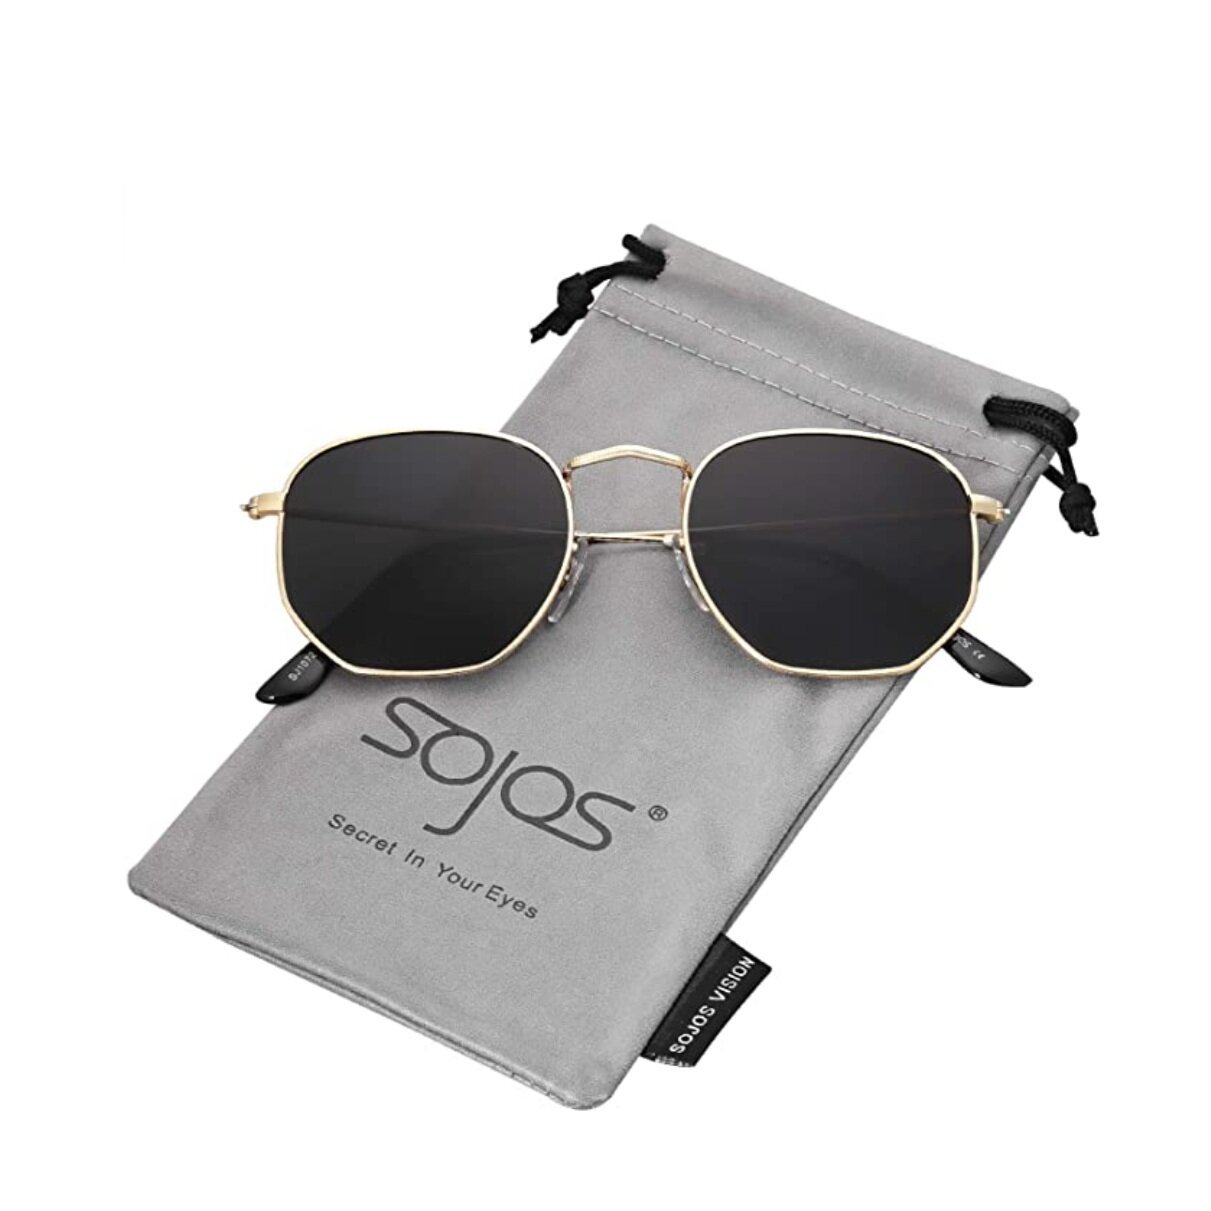 SOJOS Sunglasses ($19.99)